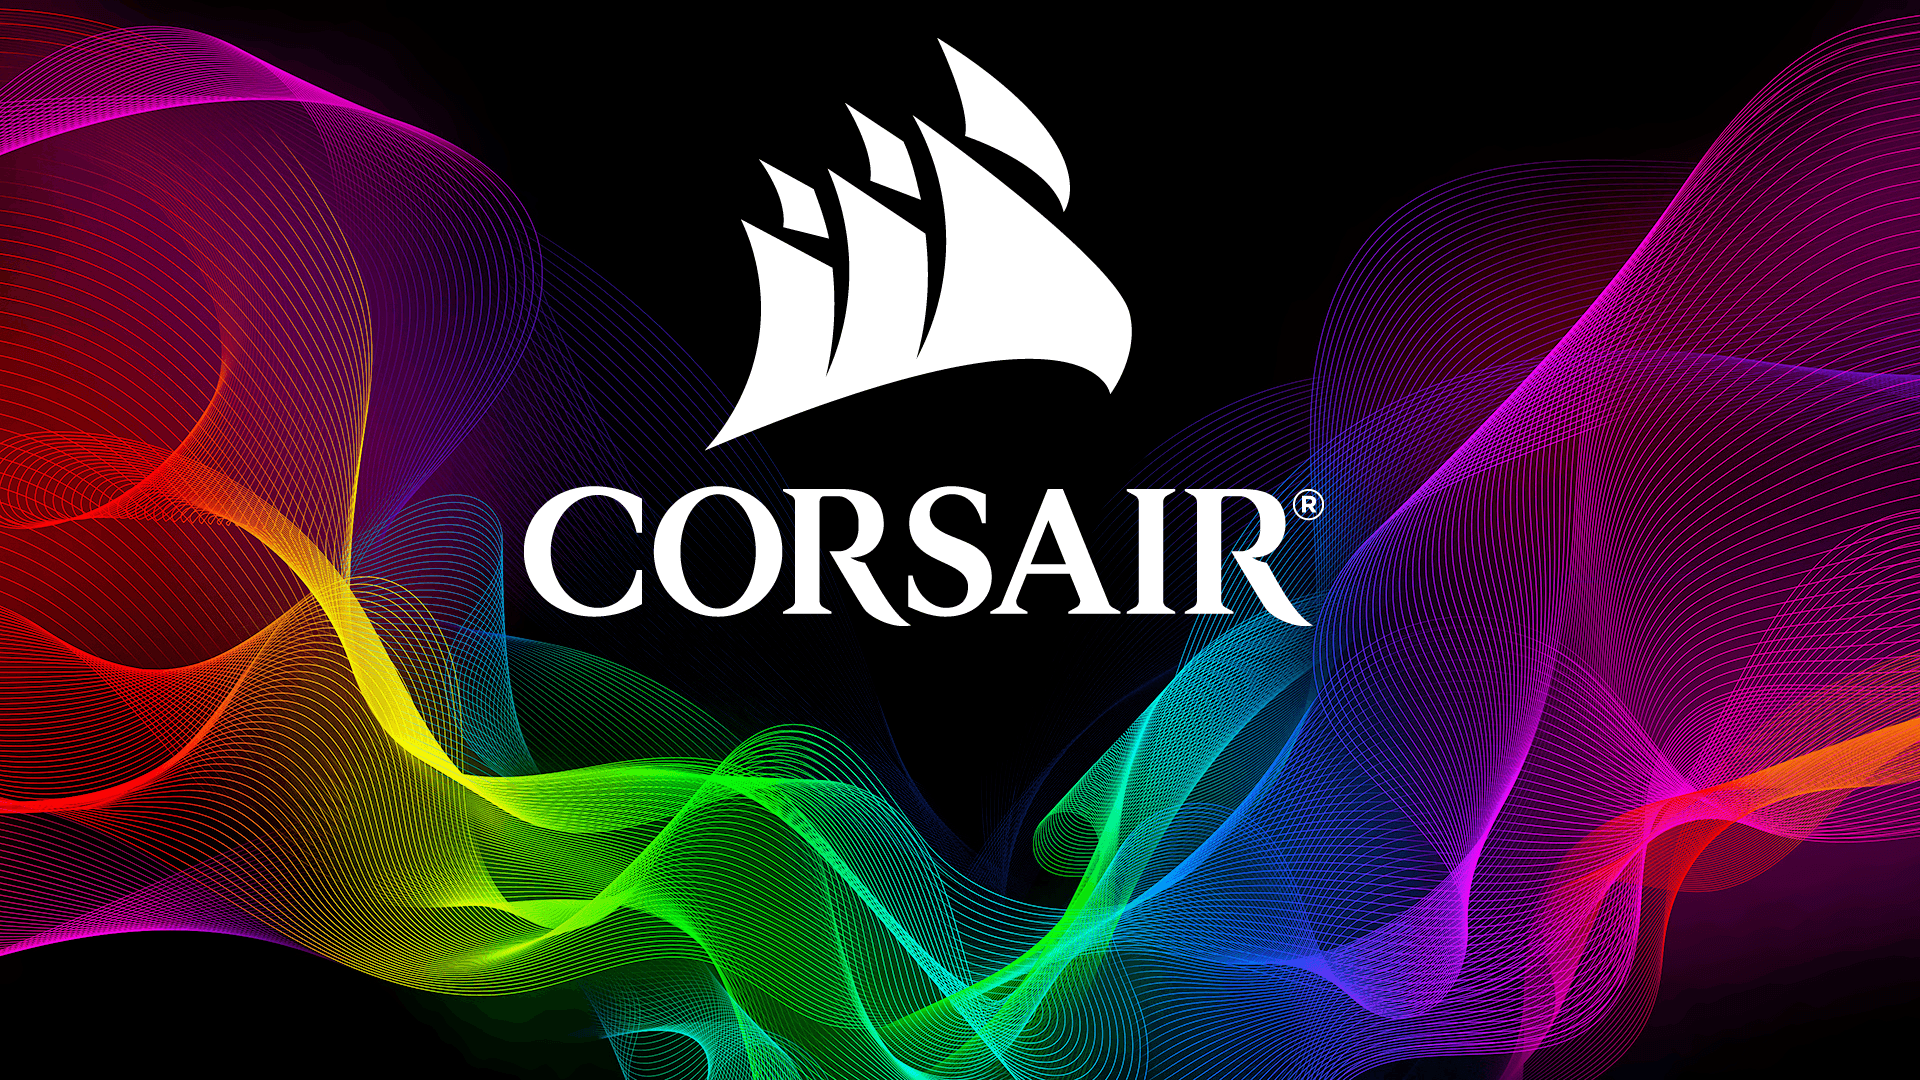 Corsair Background